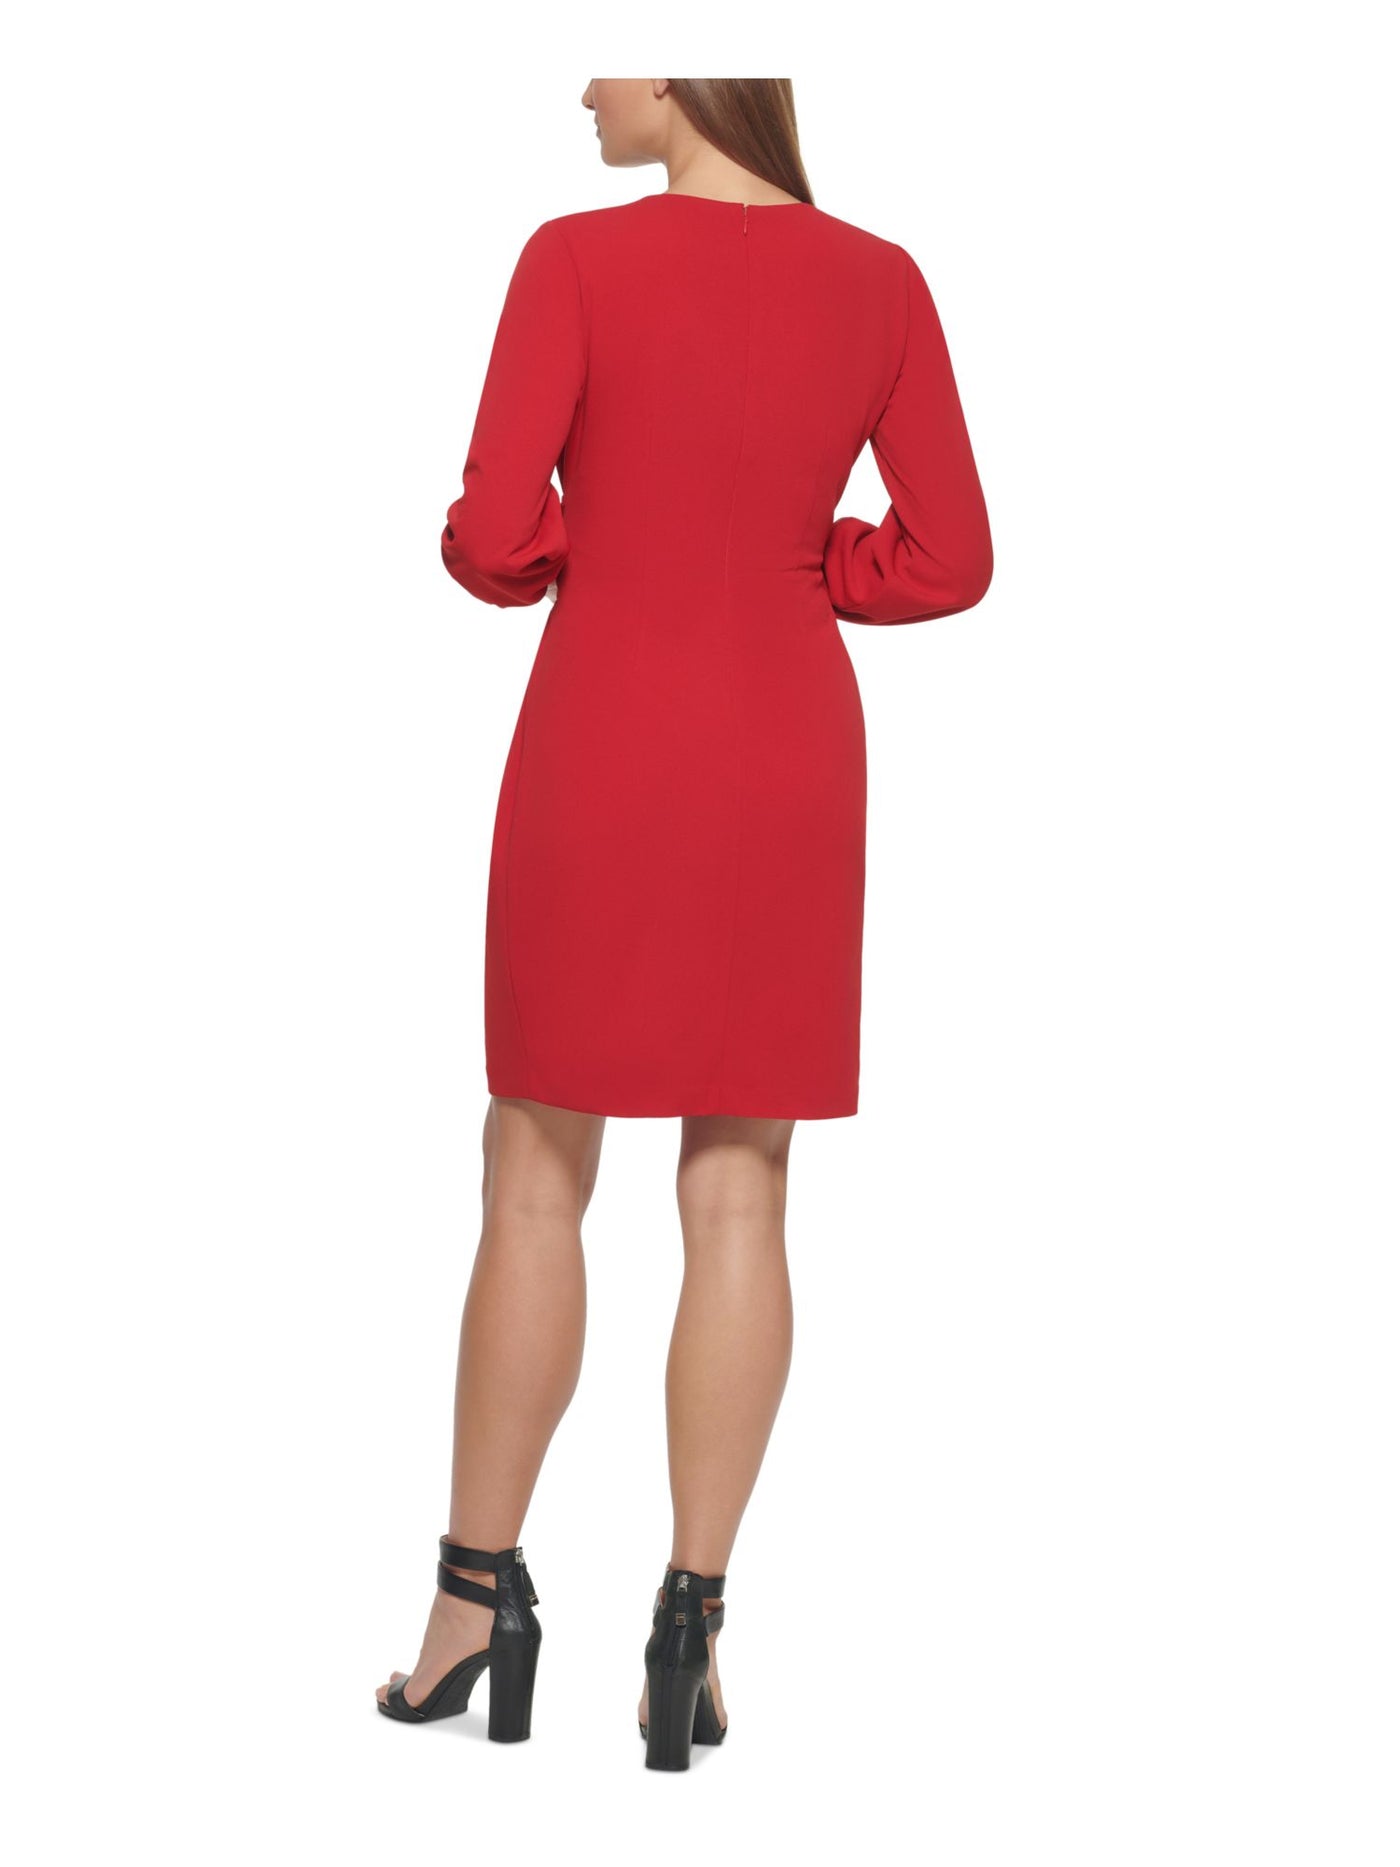 DKNY Womens Red Stretch Zippered Twist Front Side Waist Long Sleeve Surplice Neckline Above The Knee Wear To Work Faux Wrap Dress 2